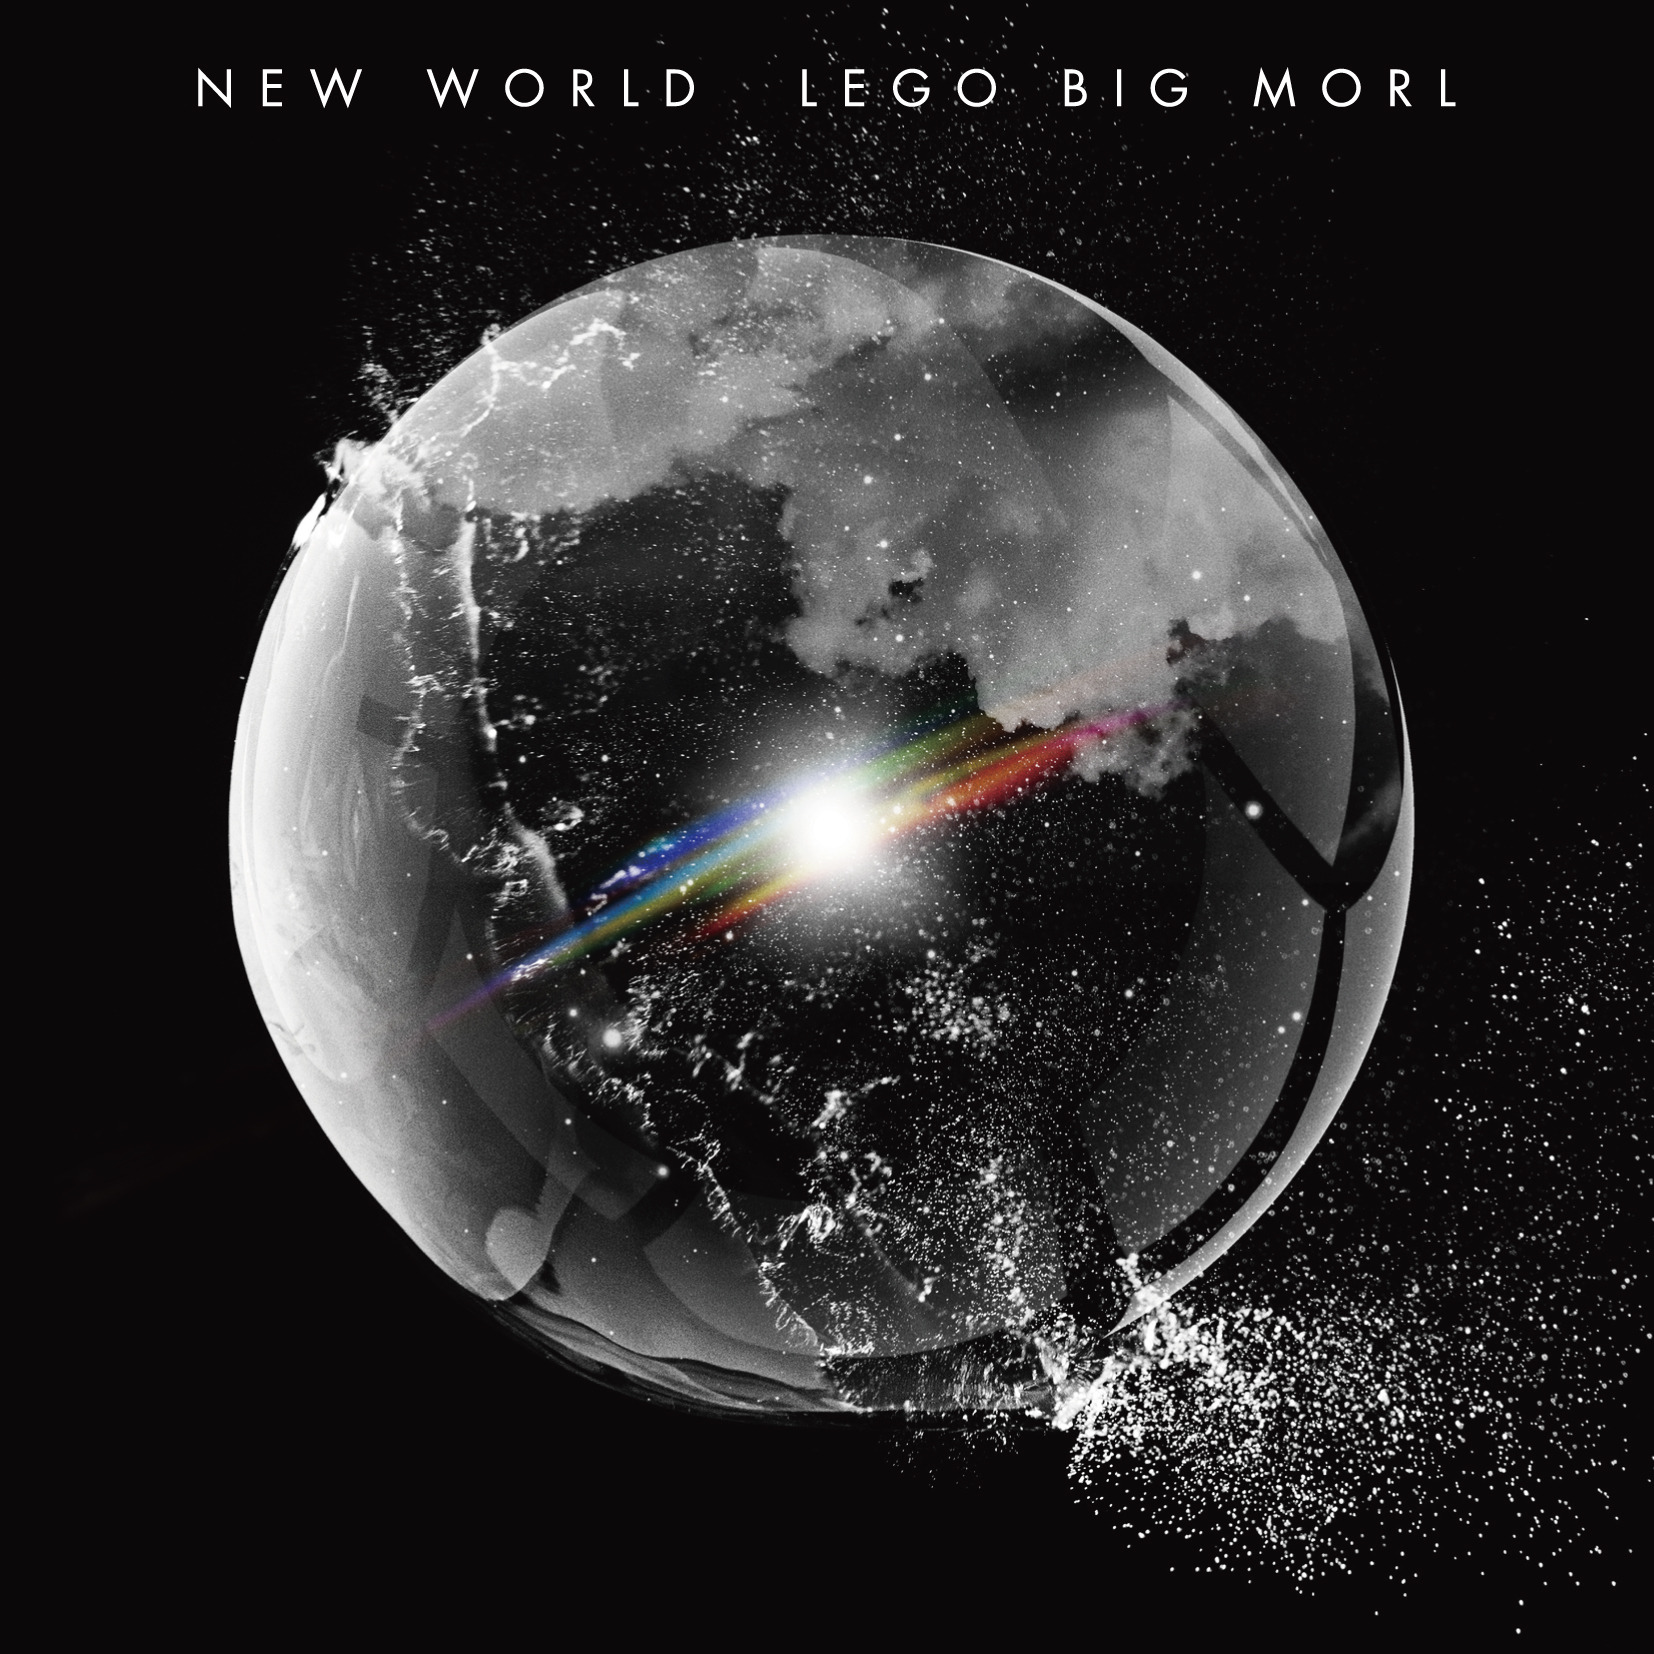 Lego_newworld_jk